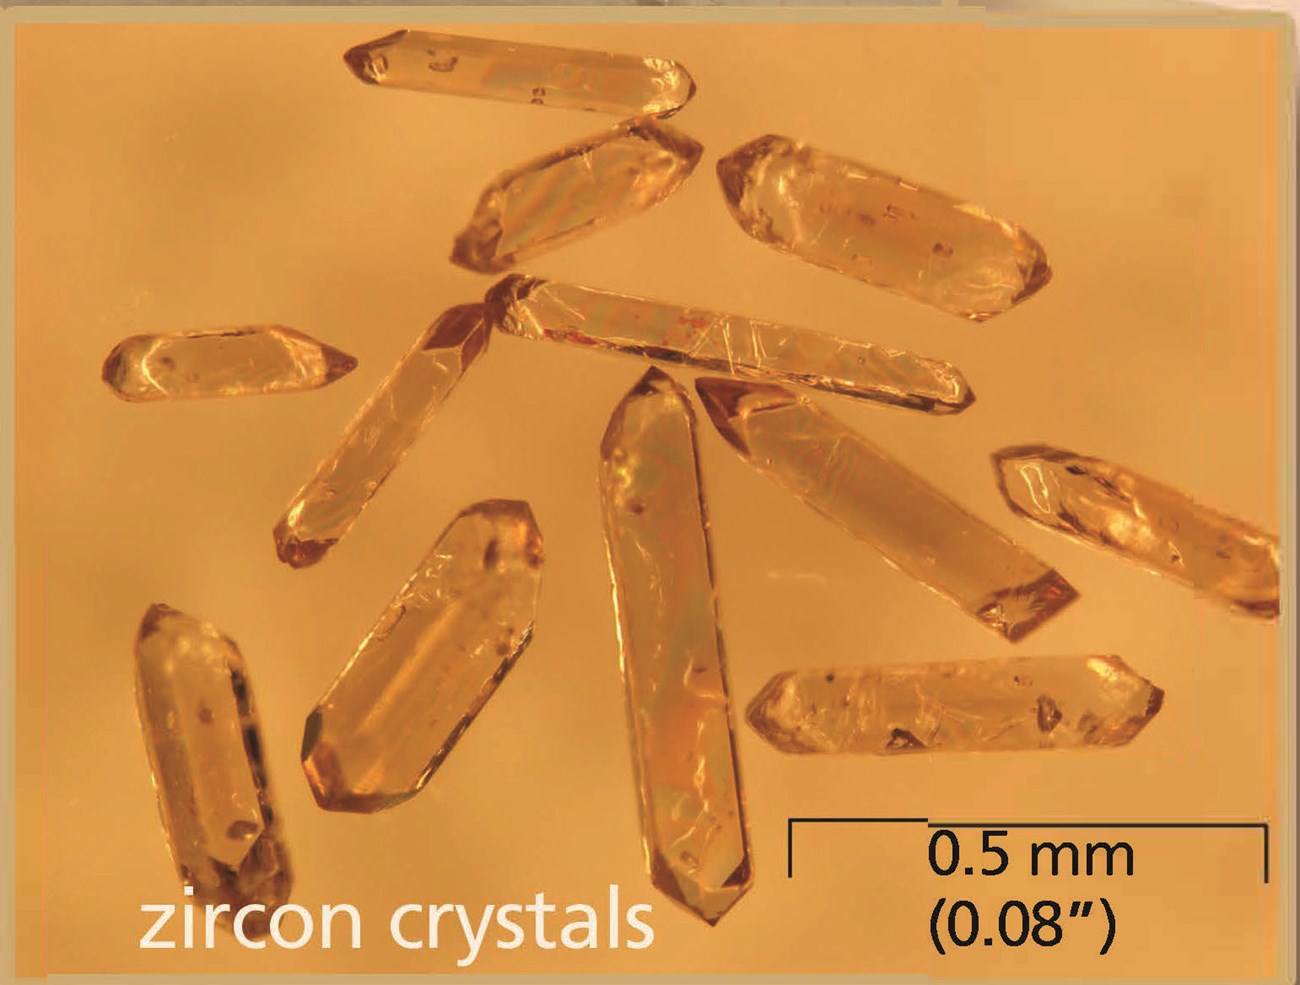 Photo of crystals as seen through a microscope.